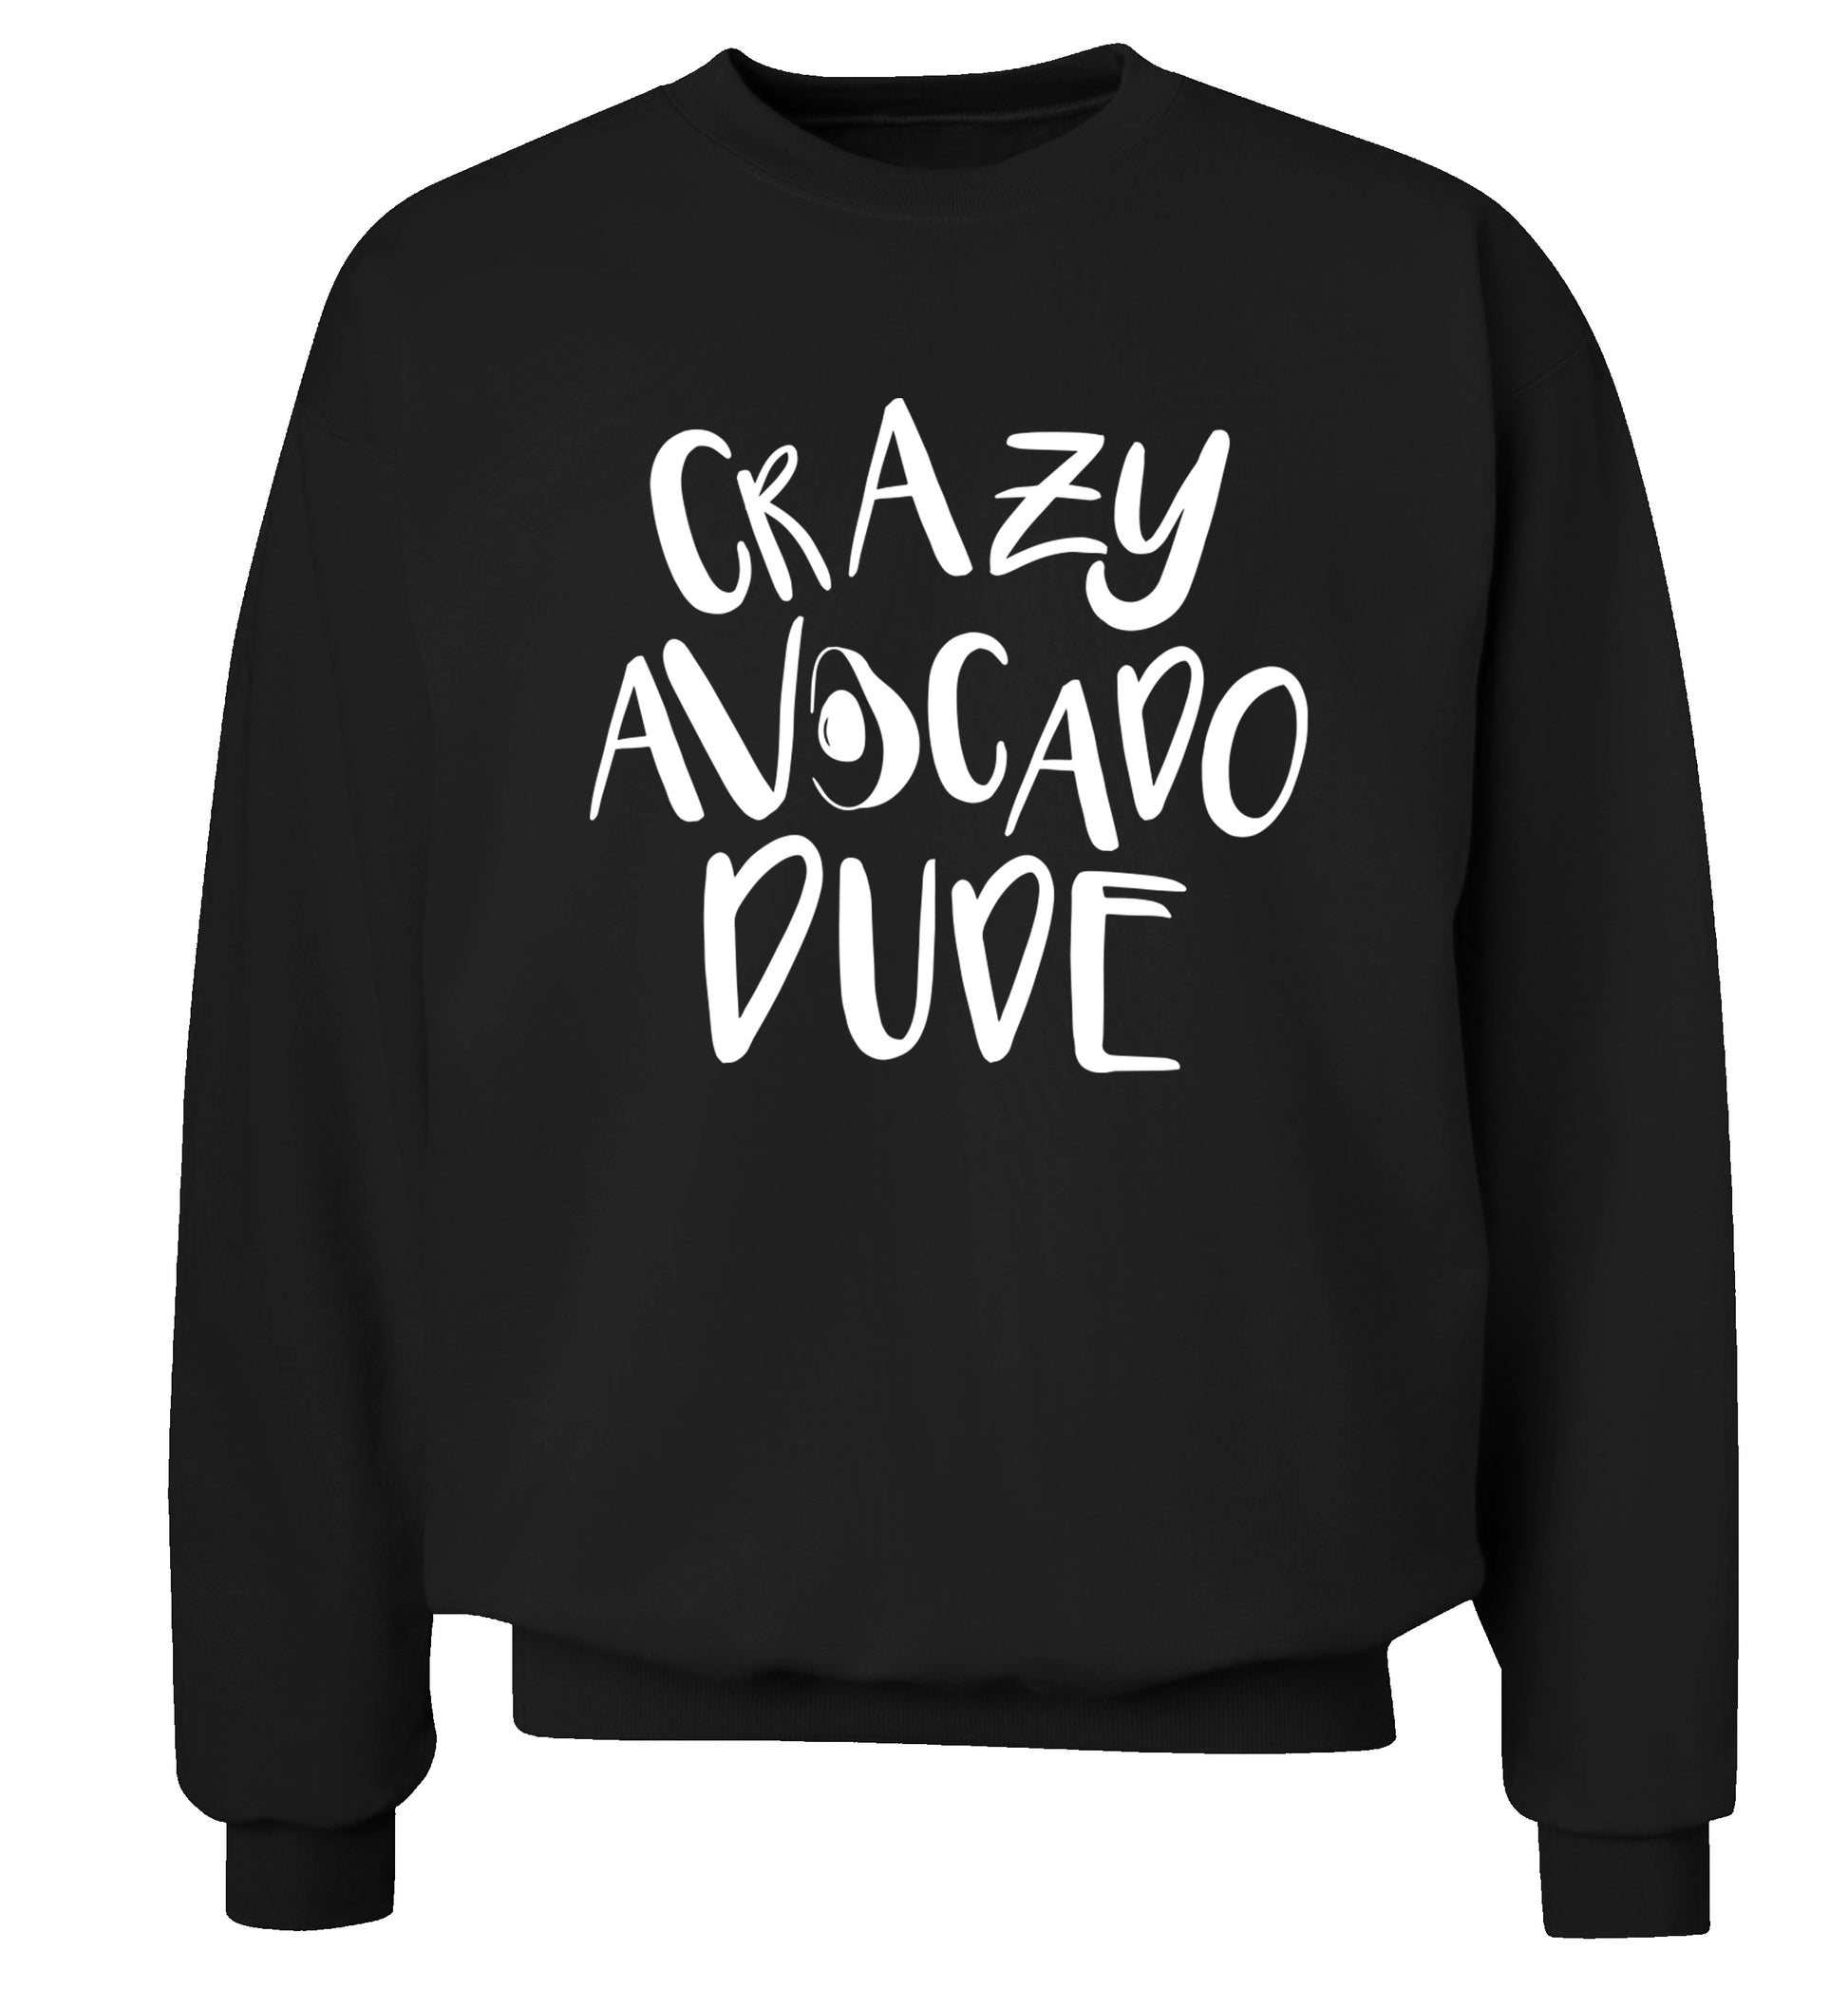 Crazy avocado dude Adult's unisex black Sweater 2XL